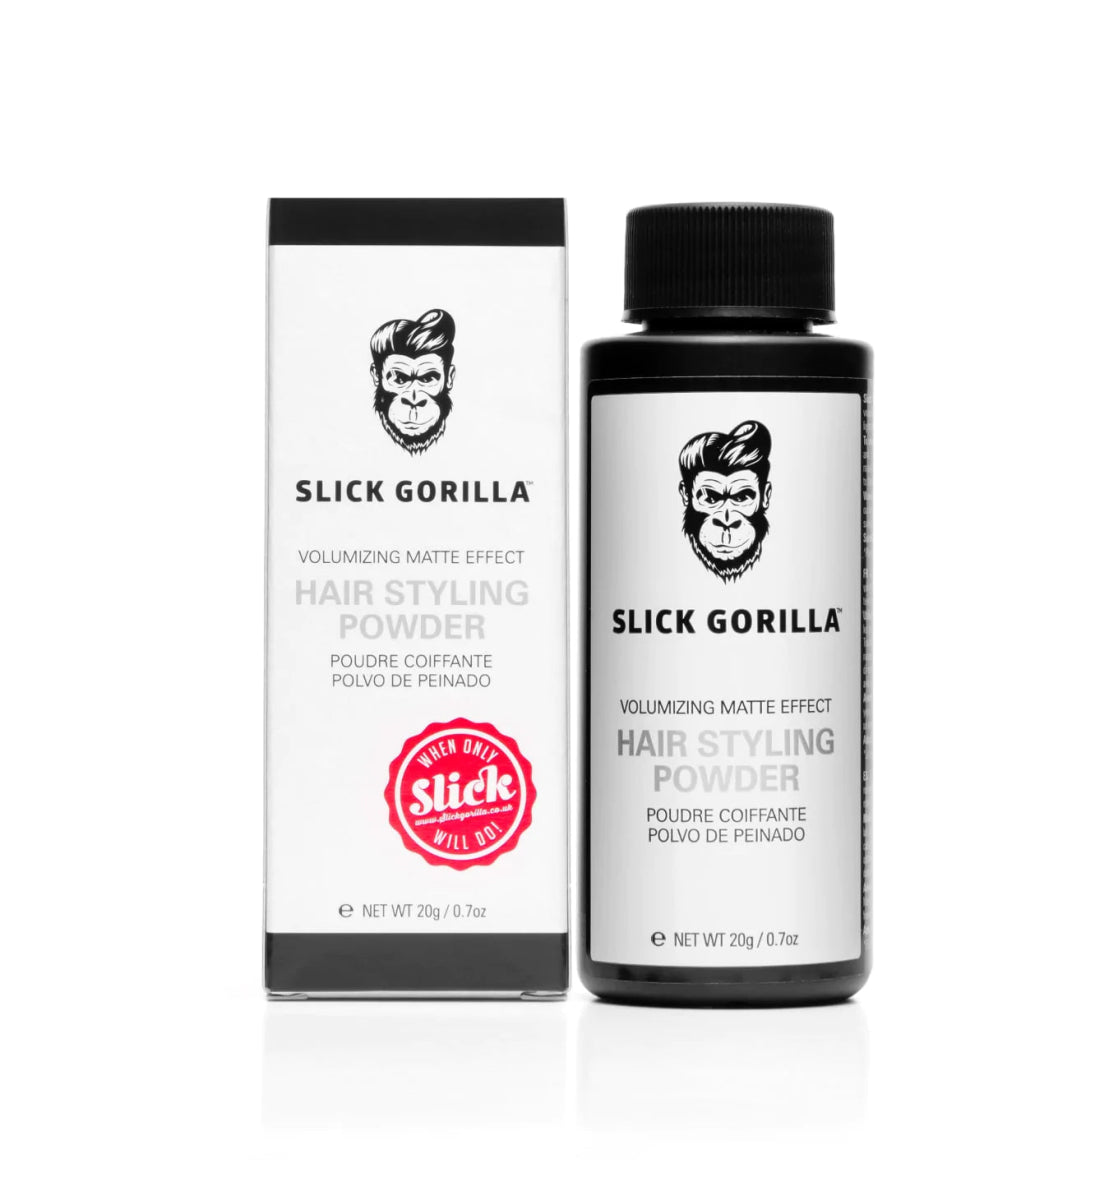 Slick Gorilla Hair Styling Powder 20g - Southwestsix Cosmetics Slick Gorilla Hair Styling Powder 20g Hair Care Slick Gorilla Southwestsix Cosmetics X1 Slick Gorilla Hair Styling Powder 20g